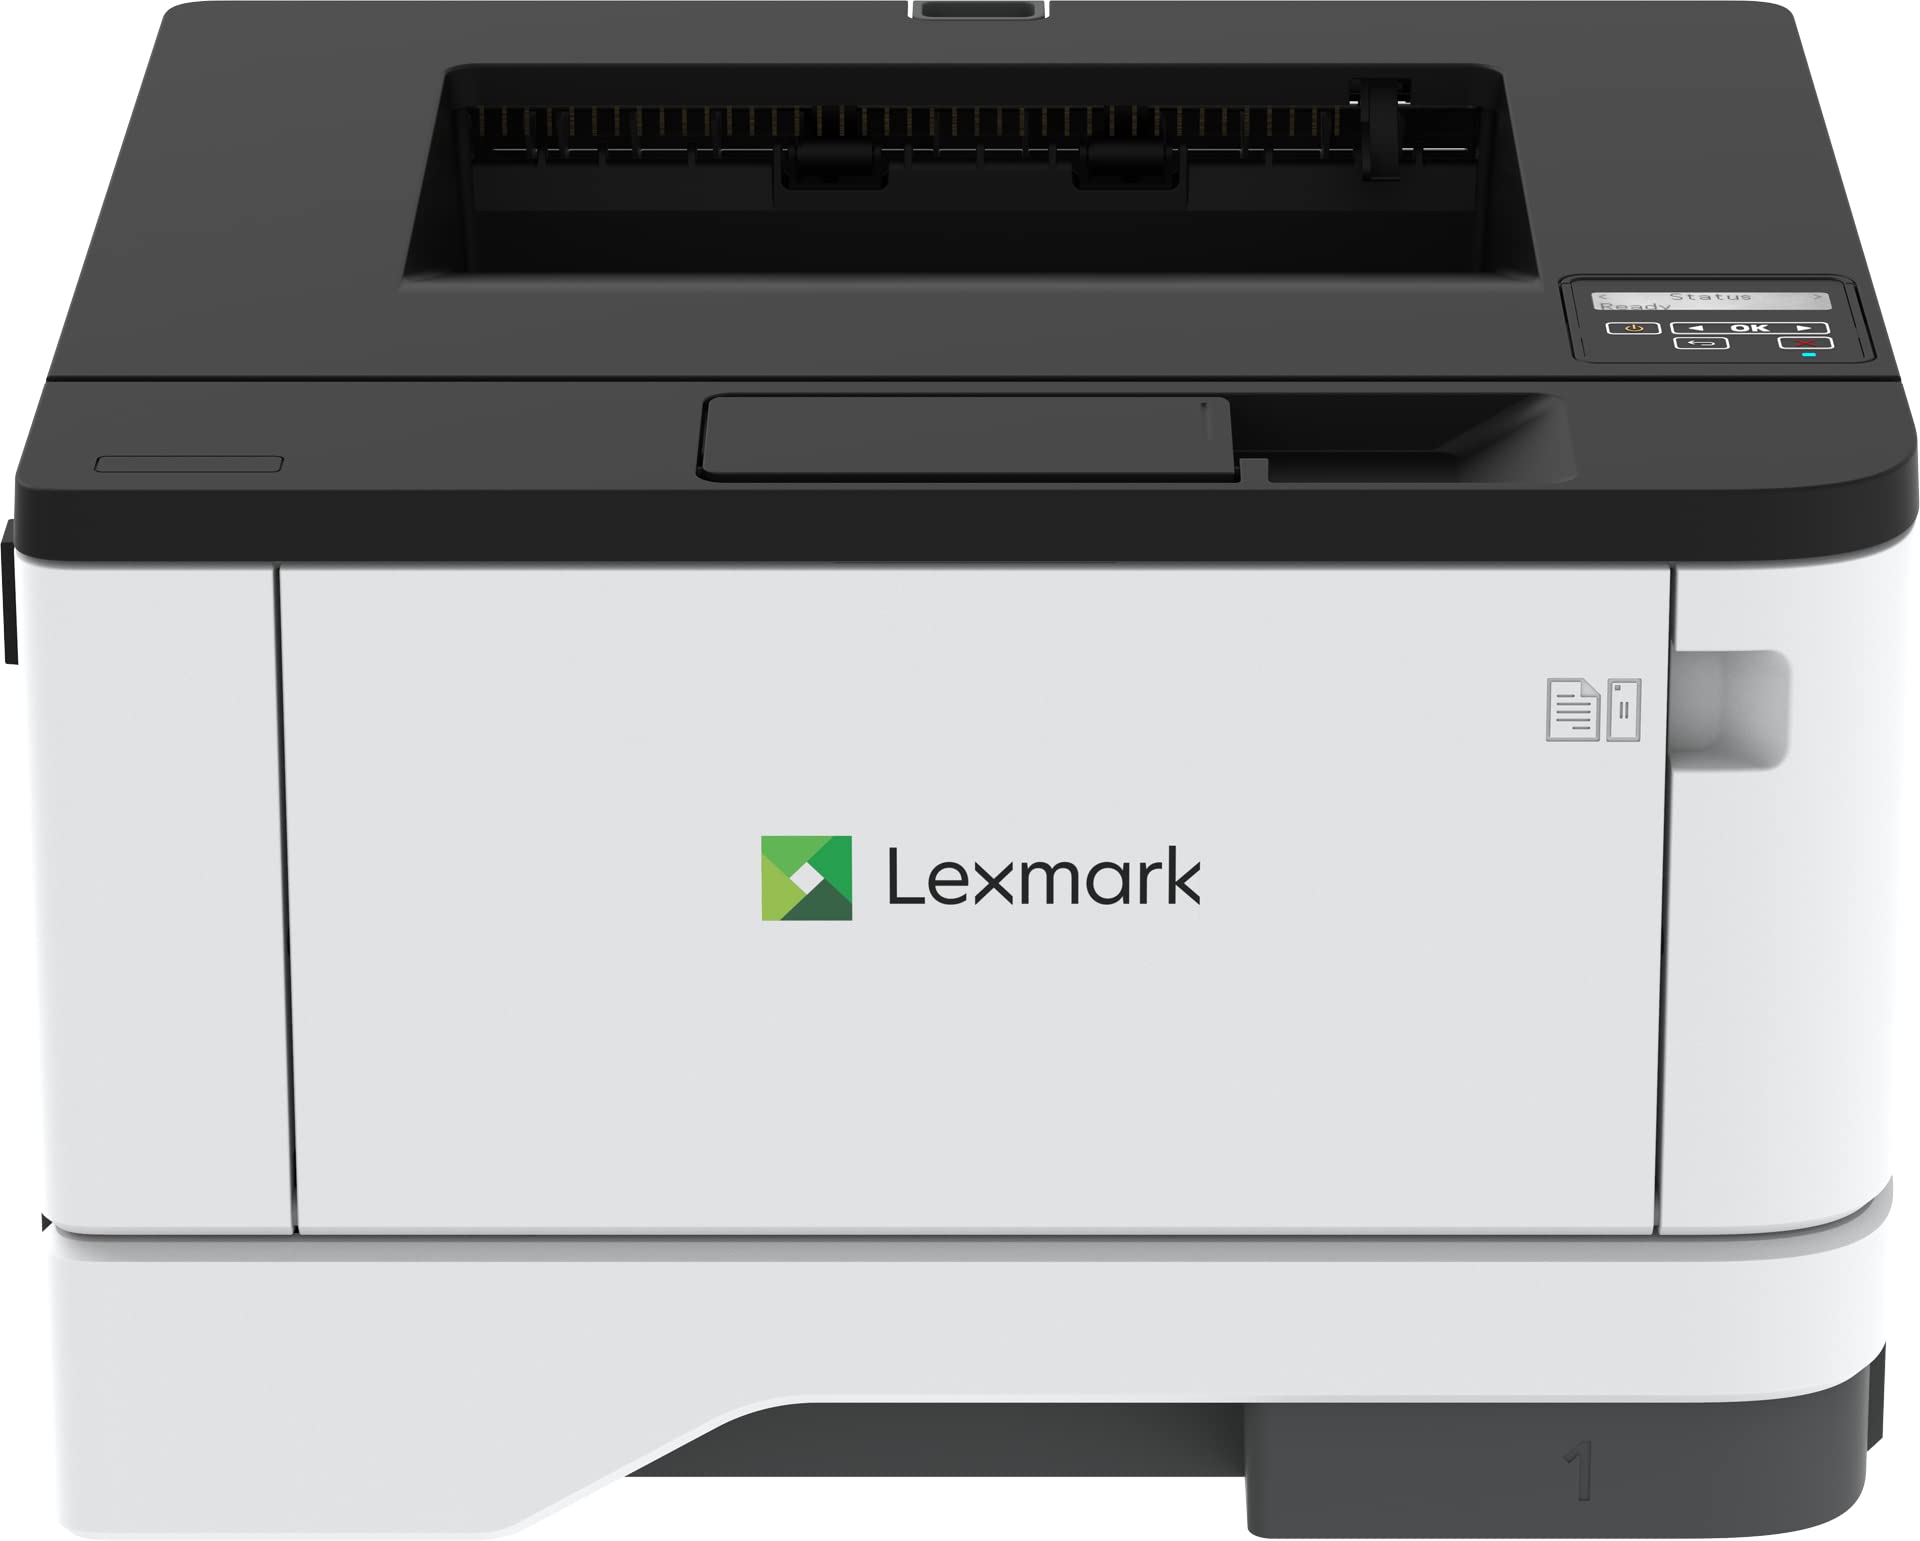 Lexmark MS331DN レーザー プリンタ - モノクロ - 40 ppm モノクロ - 2400 dpi 印刷 - 自動両面印刷 - 100 枚入力